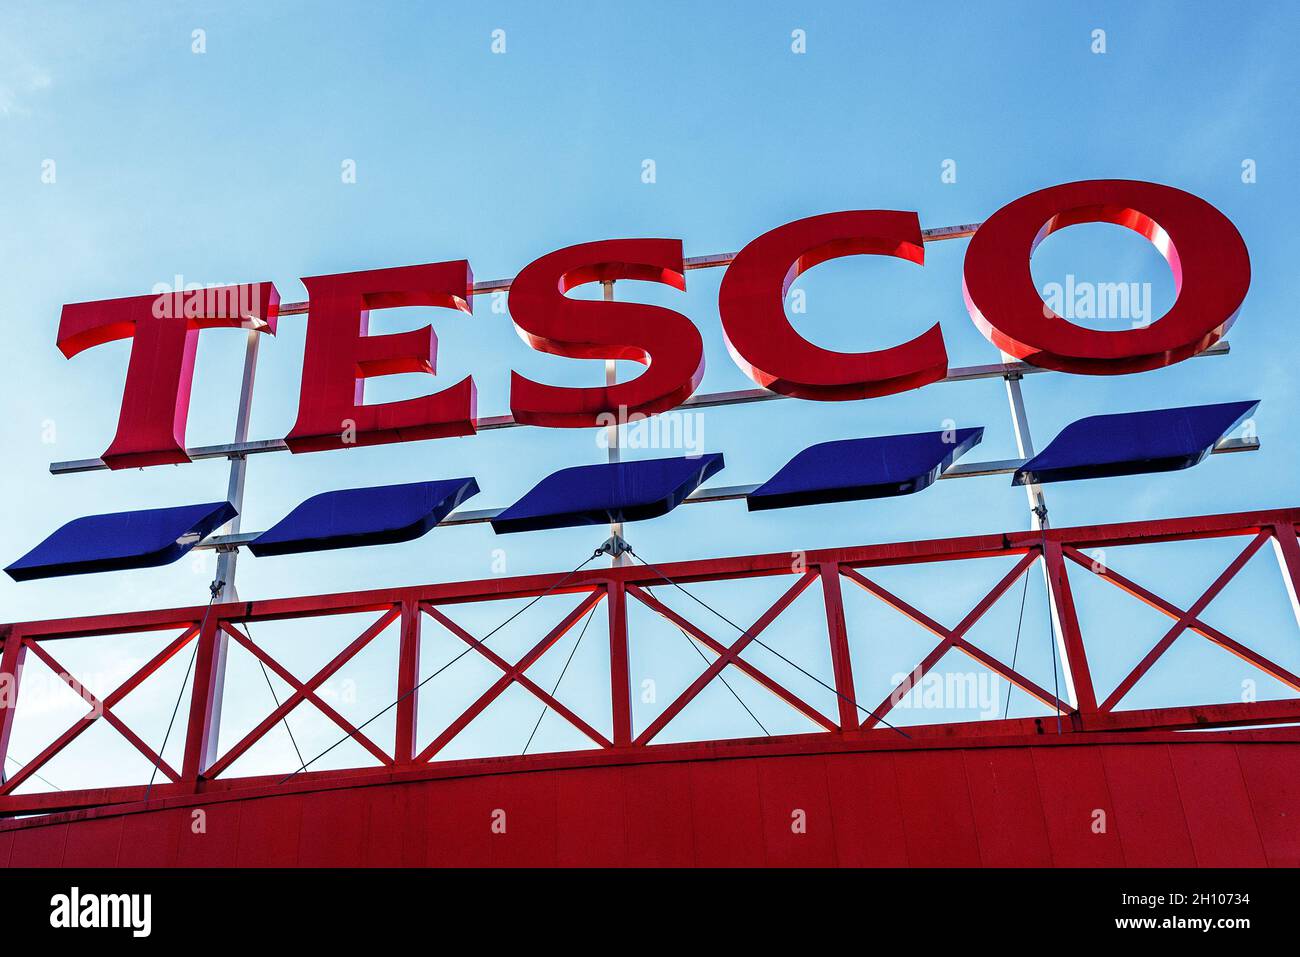 Tesco schließt Geschäft in Warschau, da der Rückzug aus Polen abgeschlossen wird Stockfoto